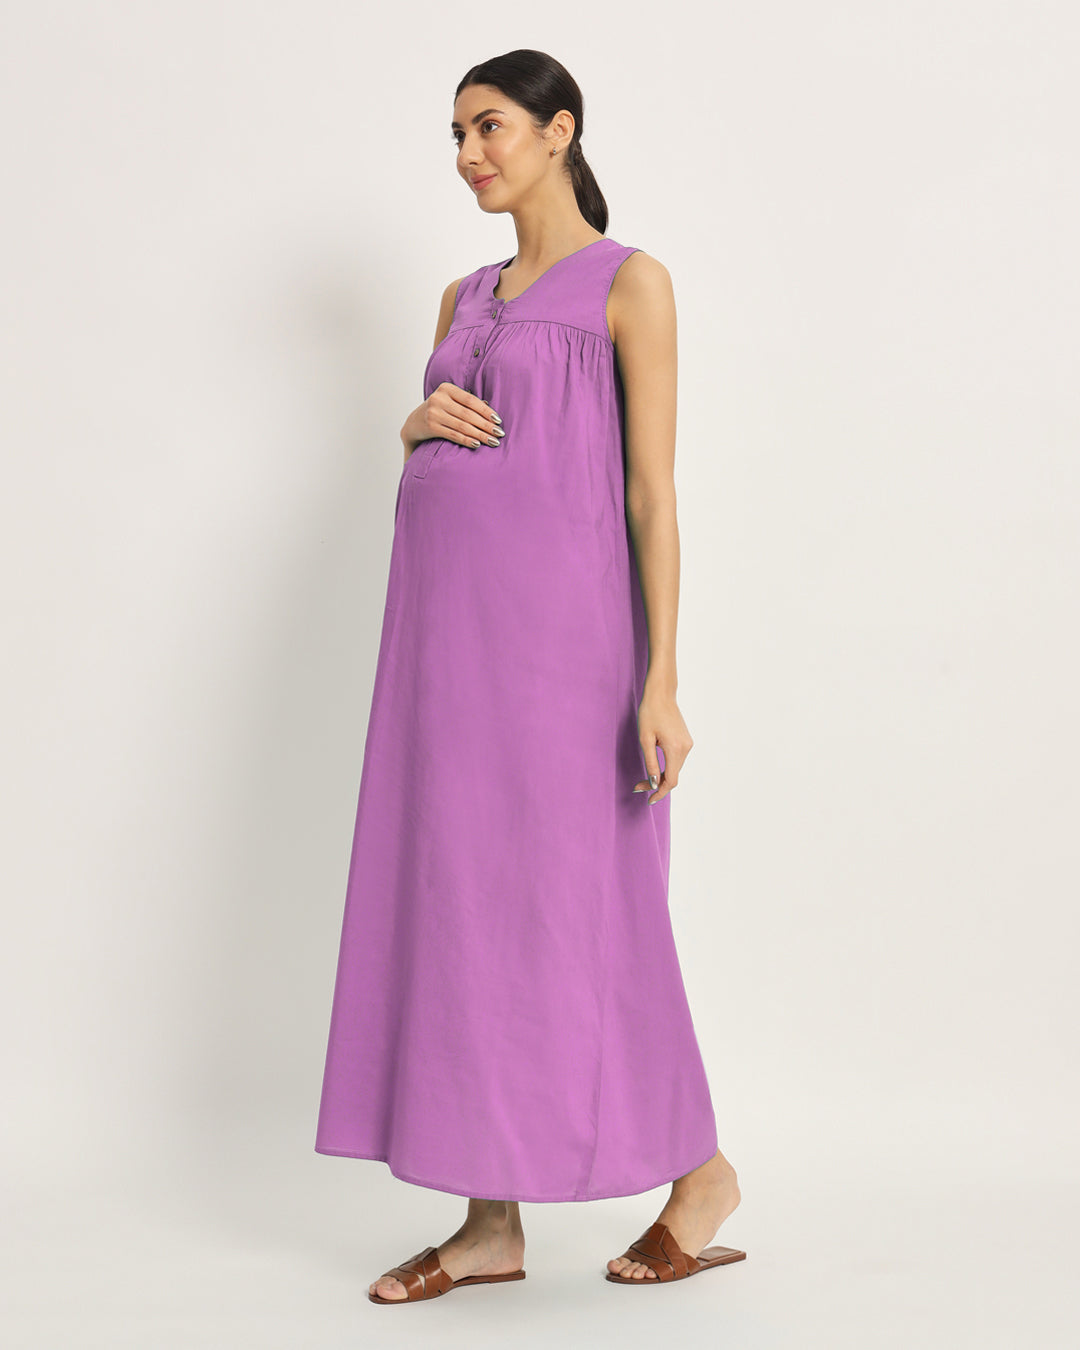 Combo: Black & Wisteria Purple Mommylicious Maternity & Nursing Dress